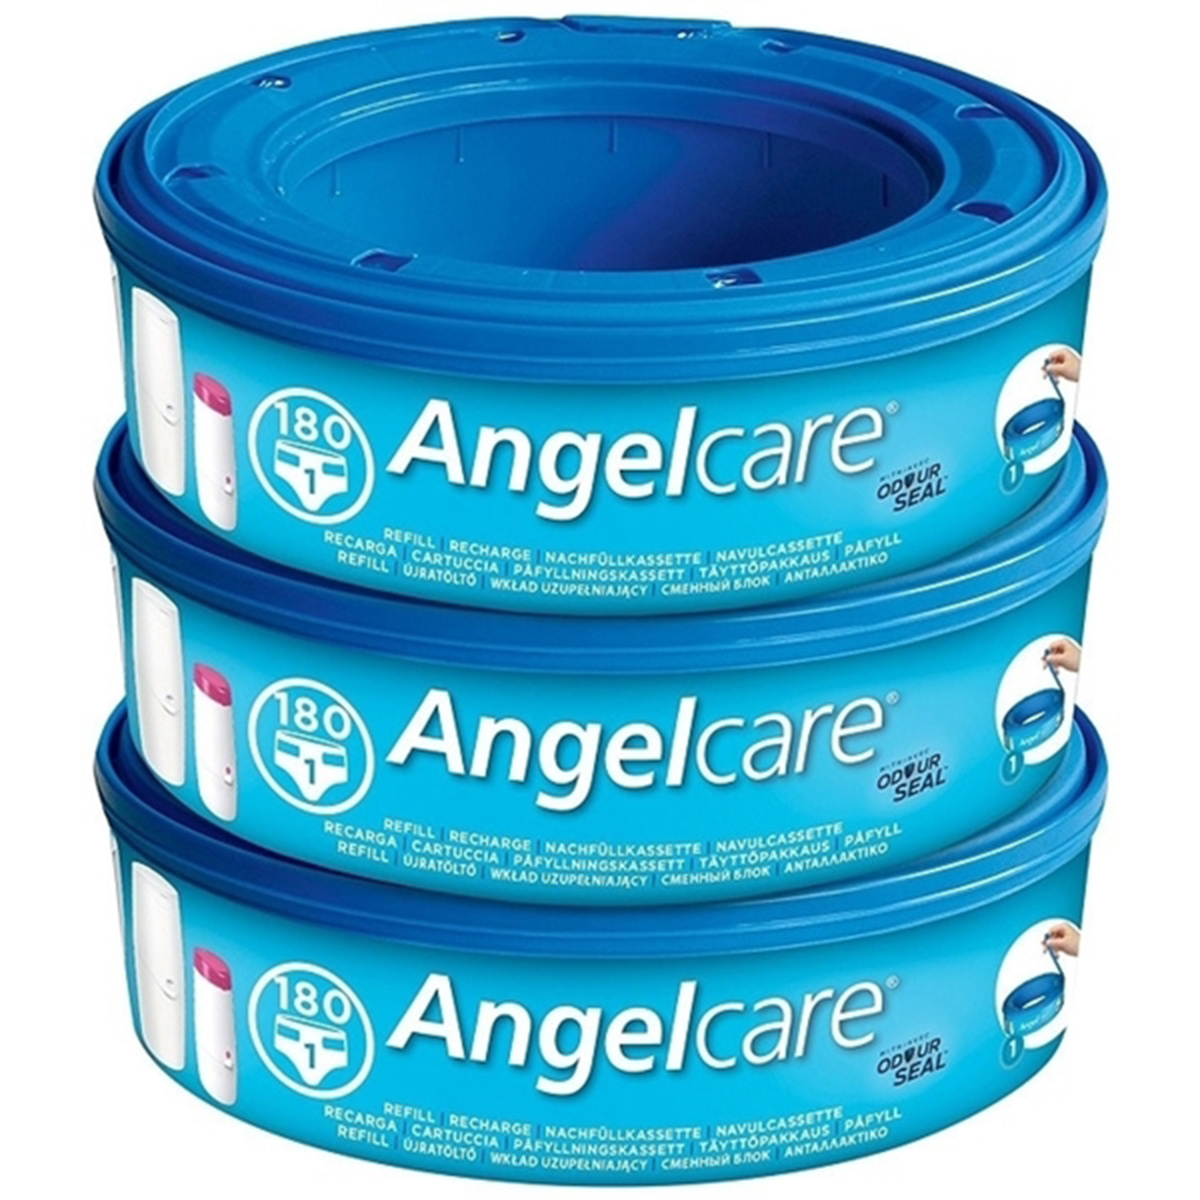 AngelCare Ανταλλακτικές Σακούλες 3 Πακέτα Για Κάδο Angelcare BR74586